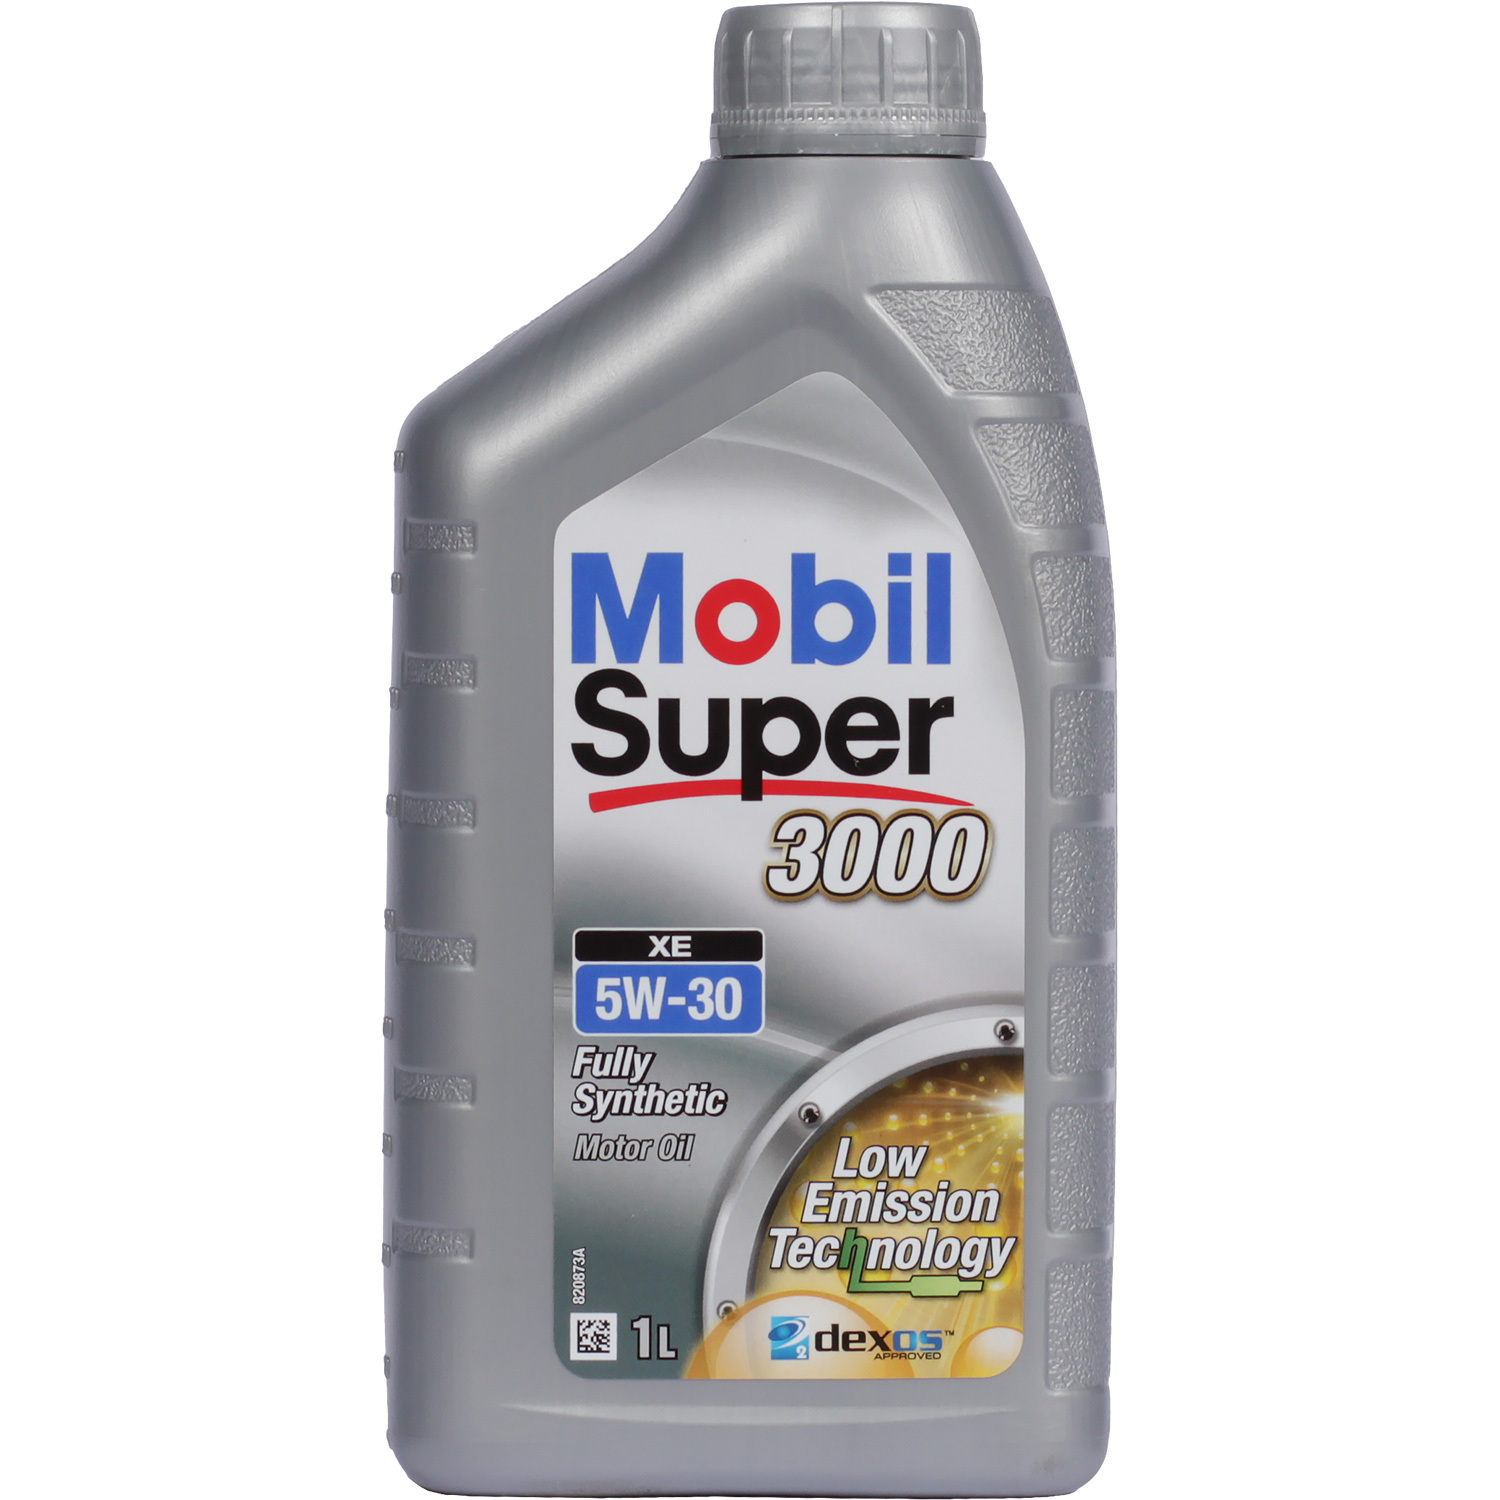 Mobil Моторное масло Mobil Super 3000 XE 5W-30, 1 л масло моторное mobil super 3000 x1 formula fe 5w 30 4л